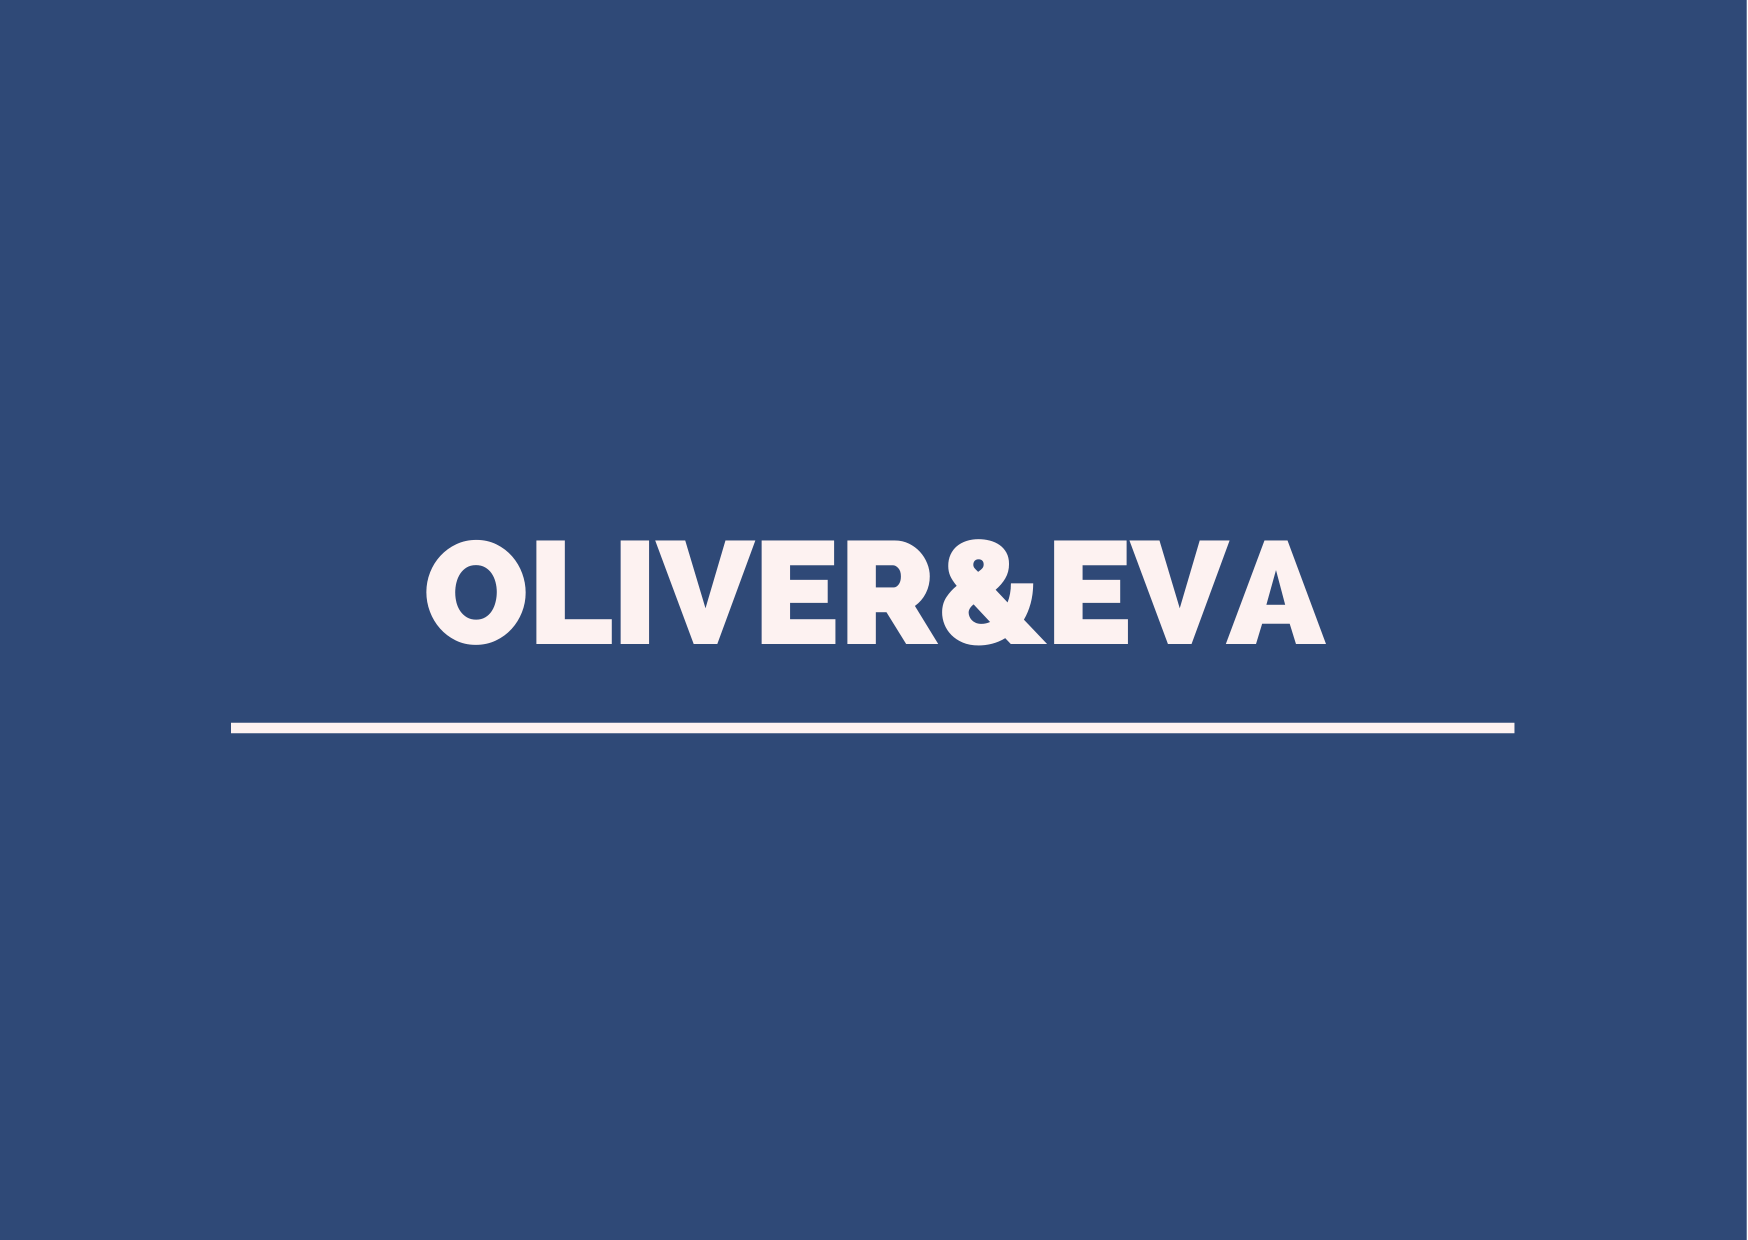 oliver & eva text